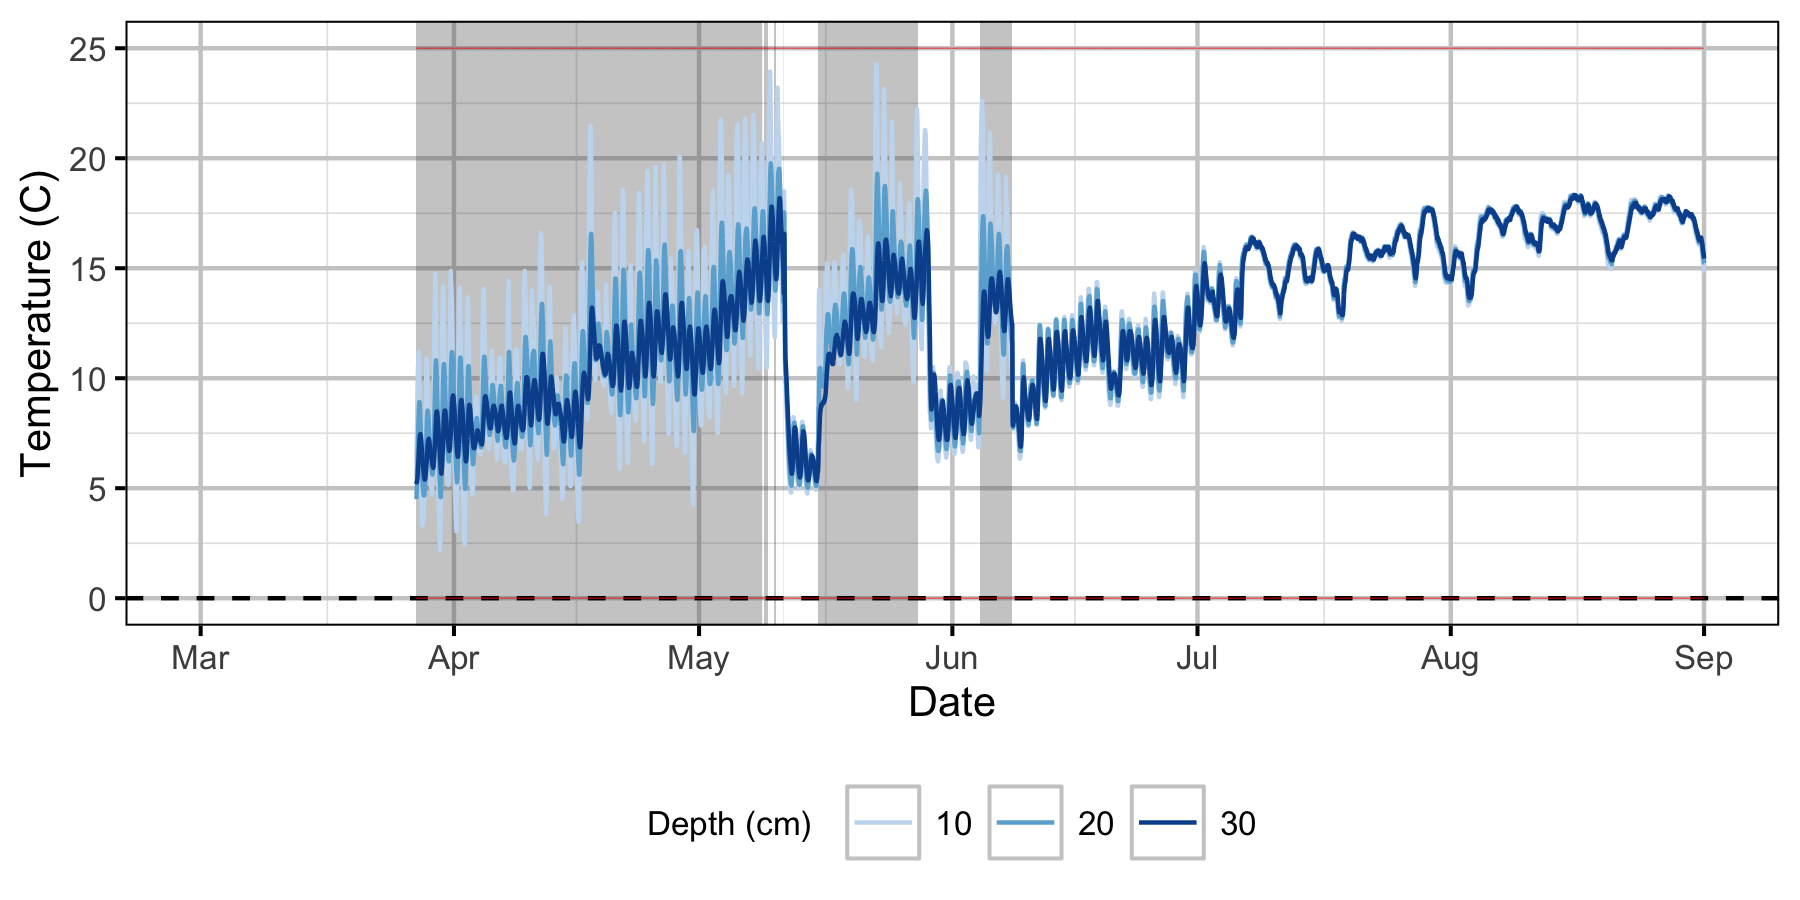 figures/Sensor Data/Absolute Gravel Temperature Stations/Norns Creek Fan/Station03.png